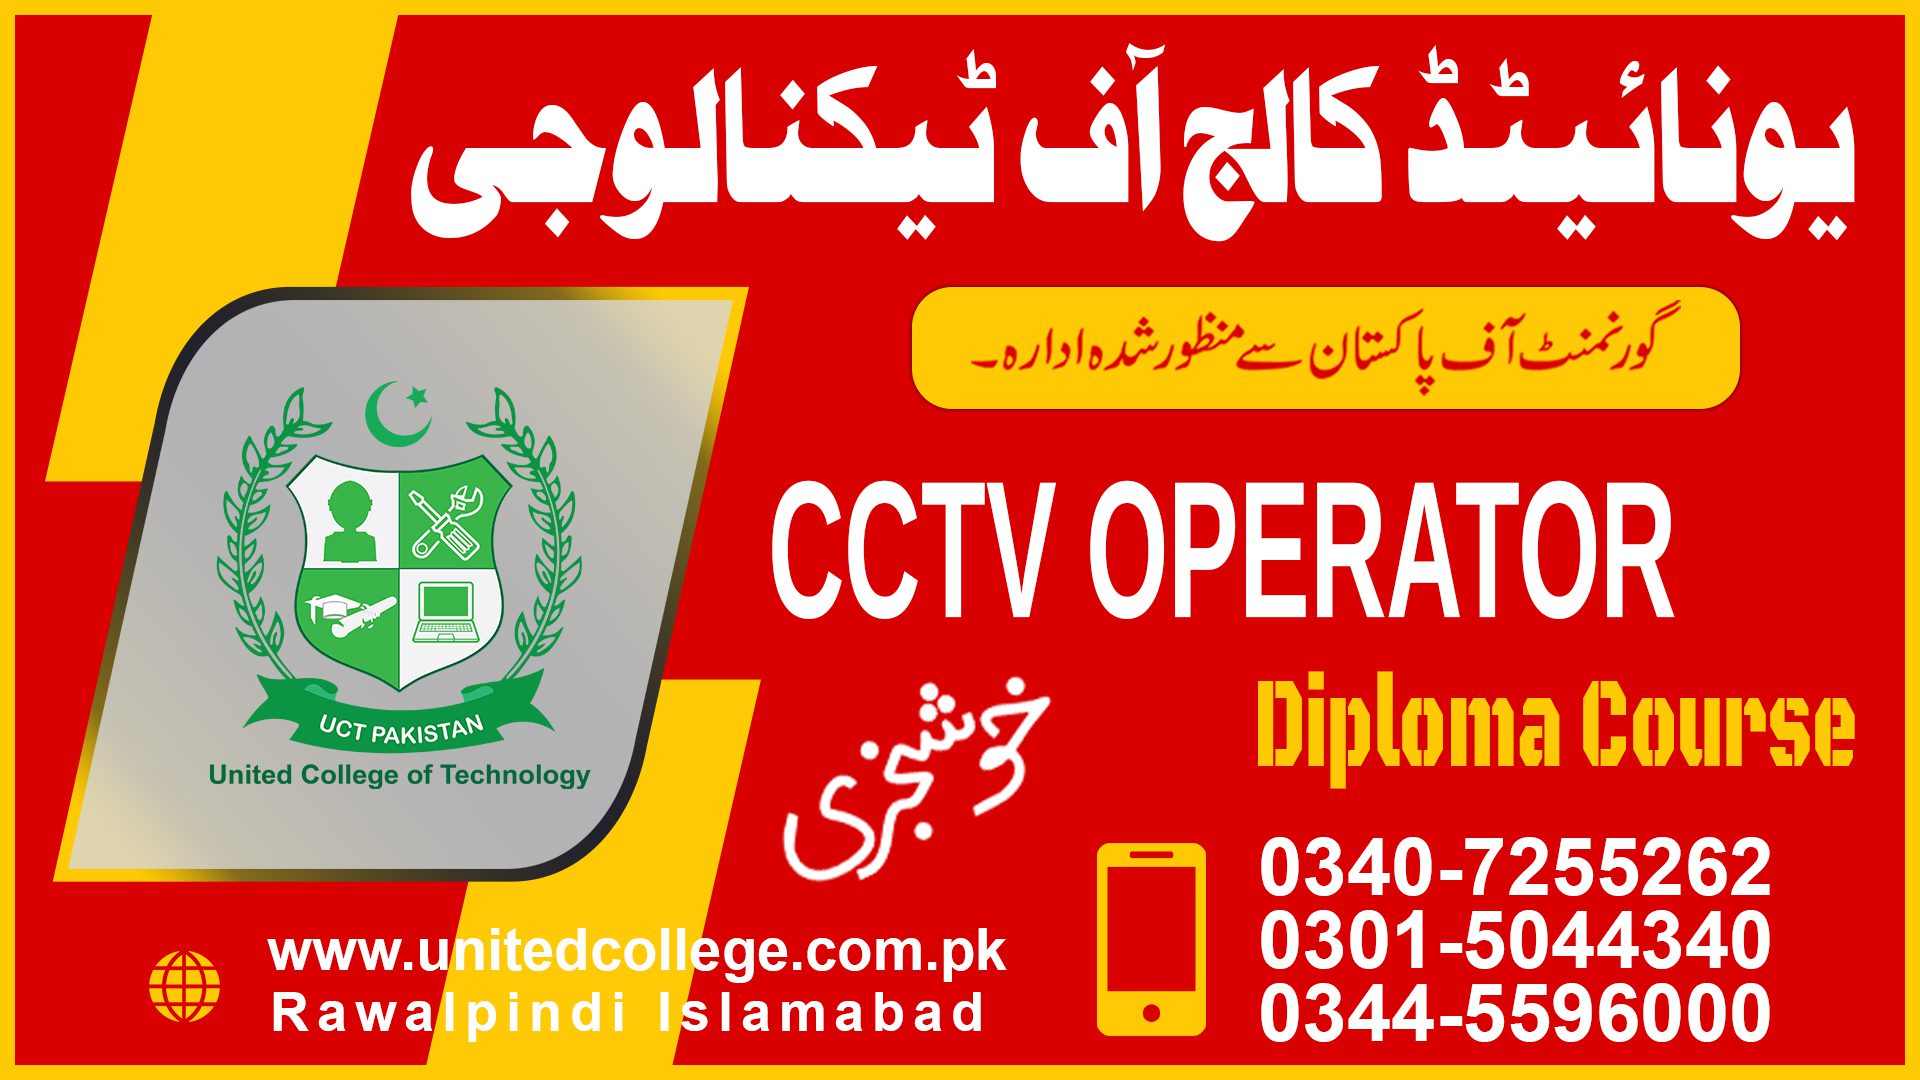 CCTV OPERATOR COURSE